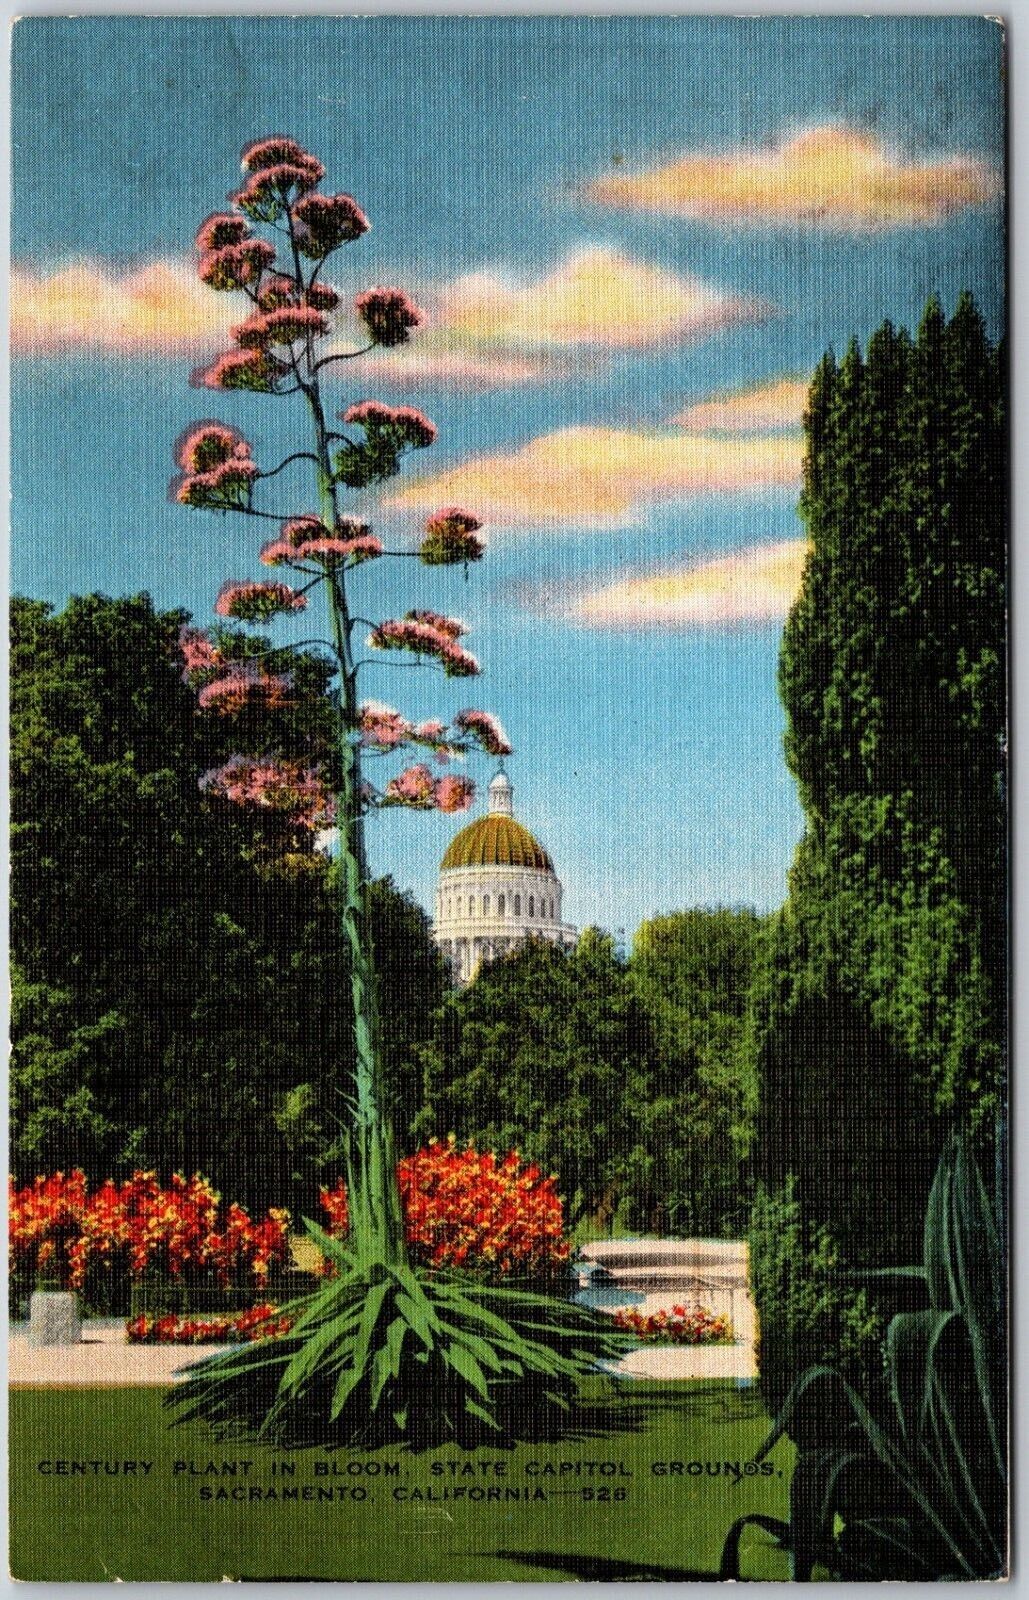 Capital Park, Sacramento, California - Postcard